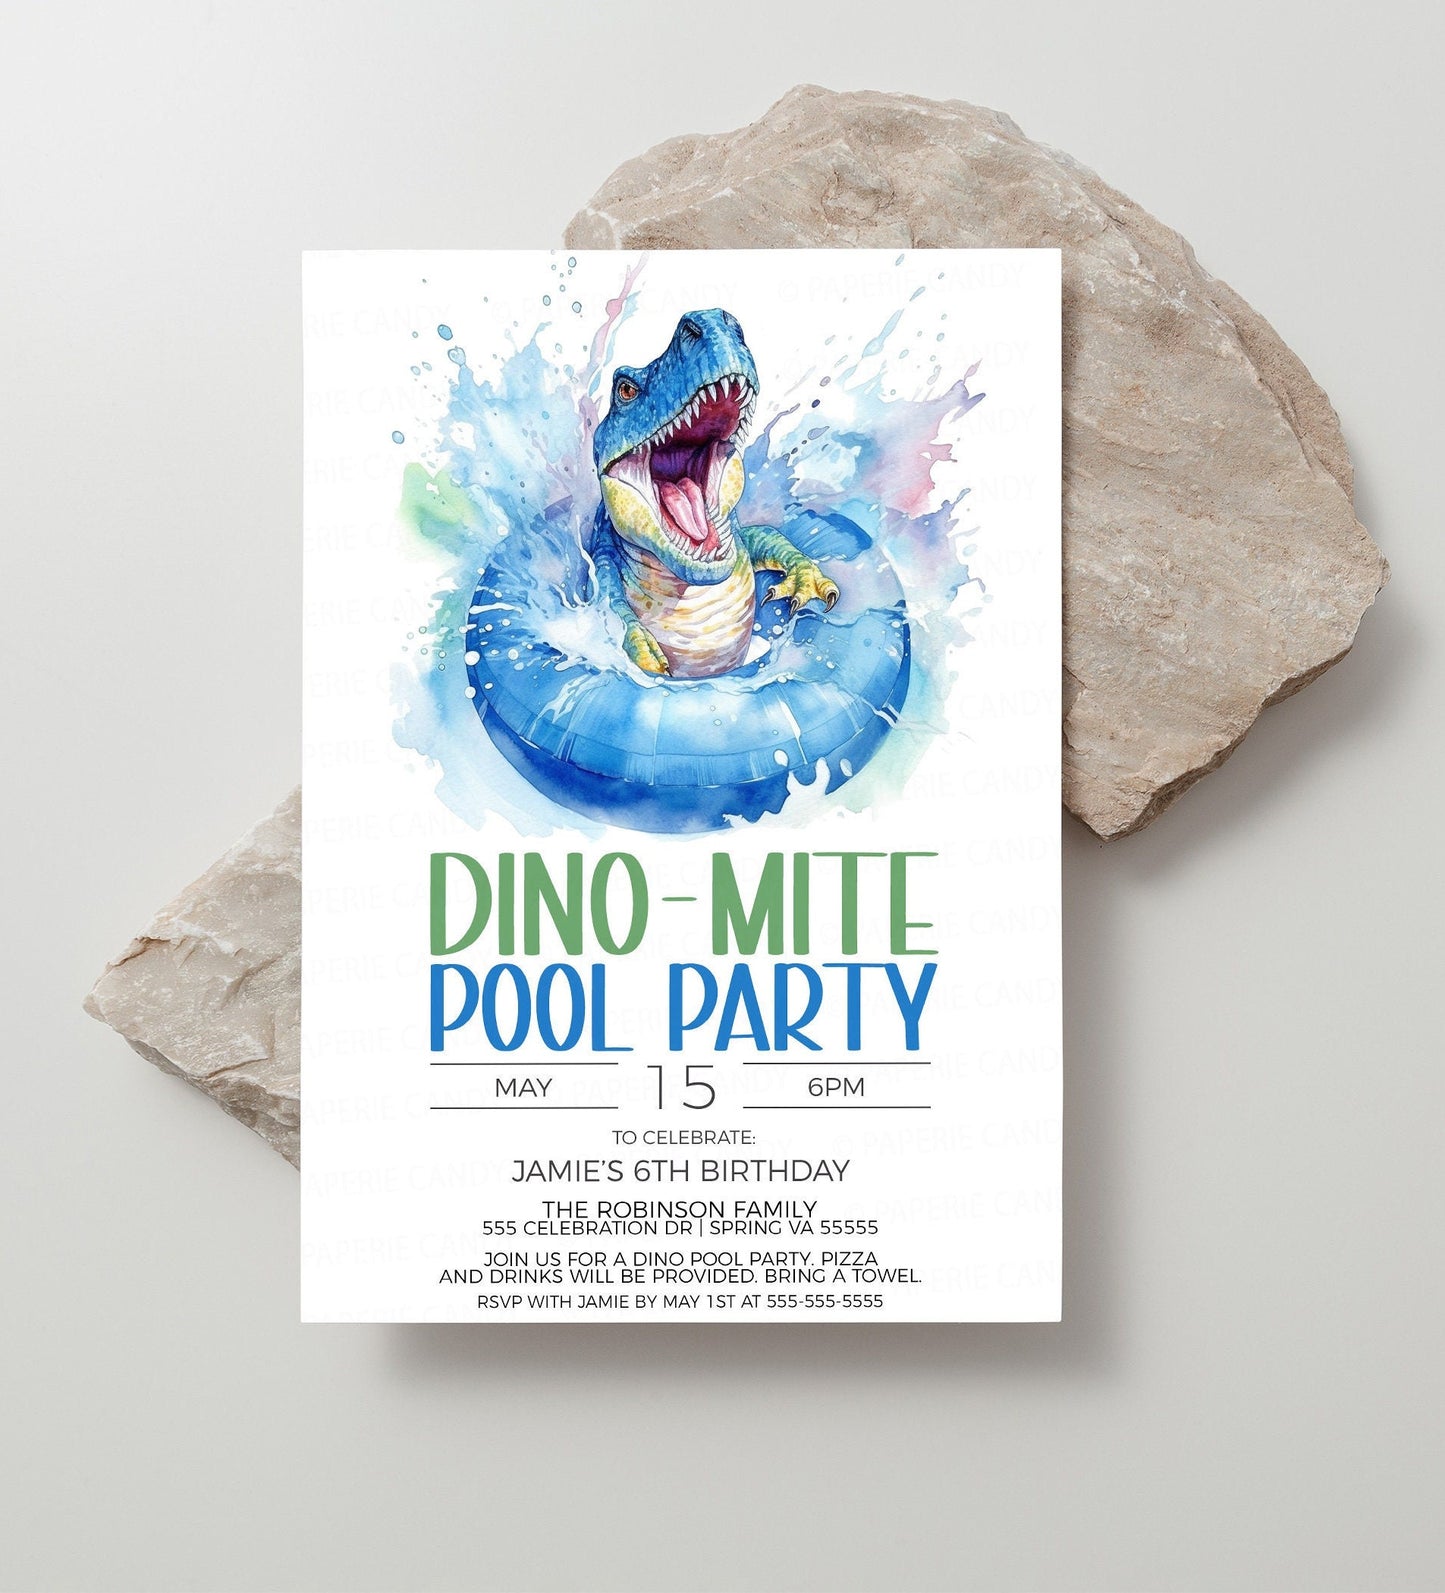 Dinosaur Pool Party Invitation, Dino Pool Party Invite, Dino-Mite Pool Party, Pool Birthday, End Of School Party, Editable Printable